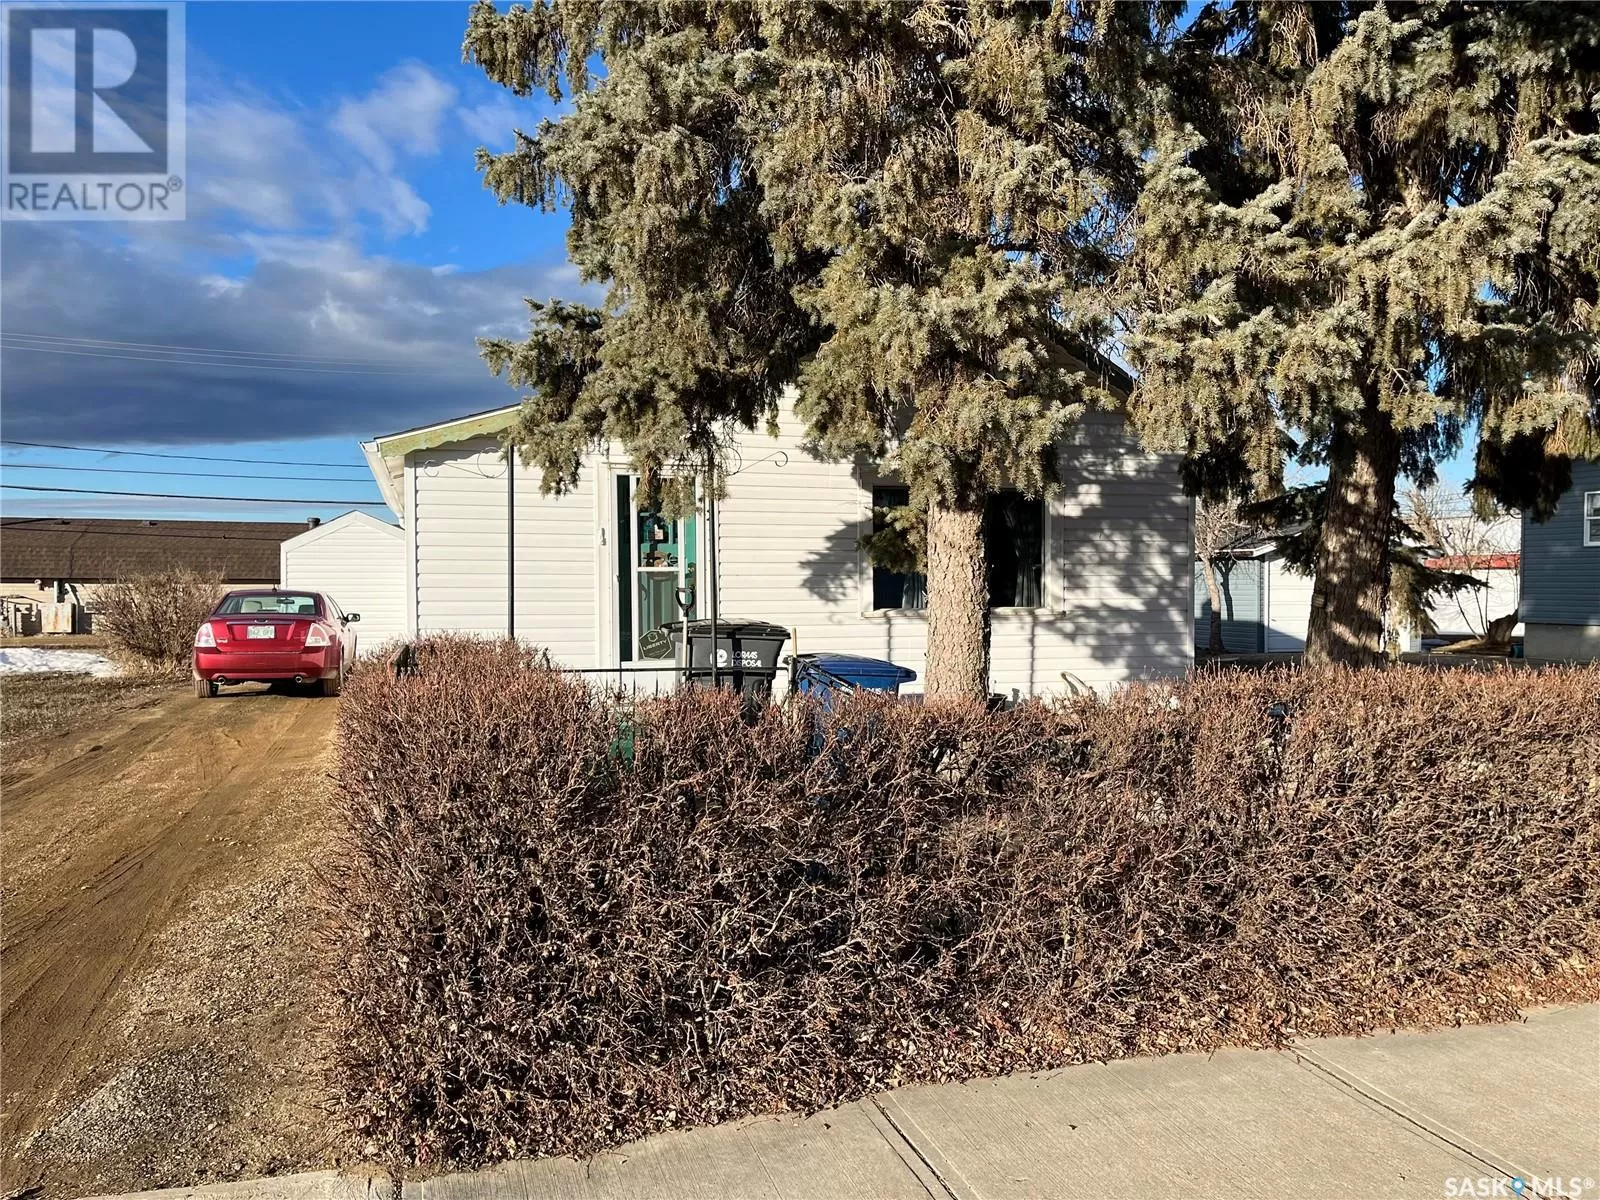 House for rent: 211 2nd Avenue E, Assiniboia, Saskatchewan S0H 0B0